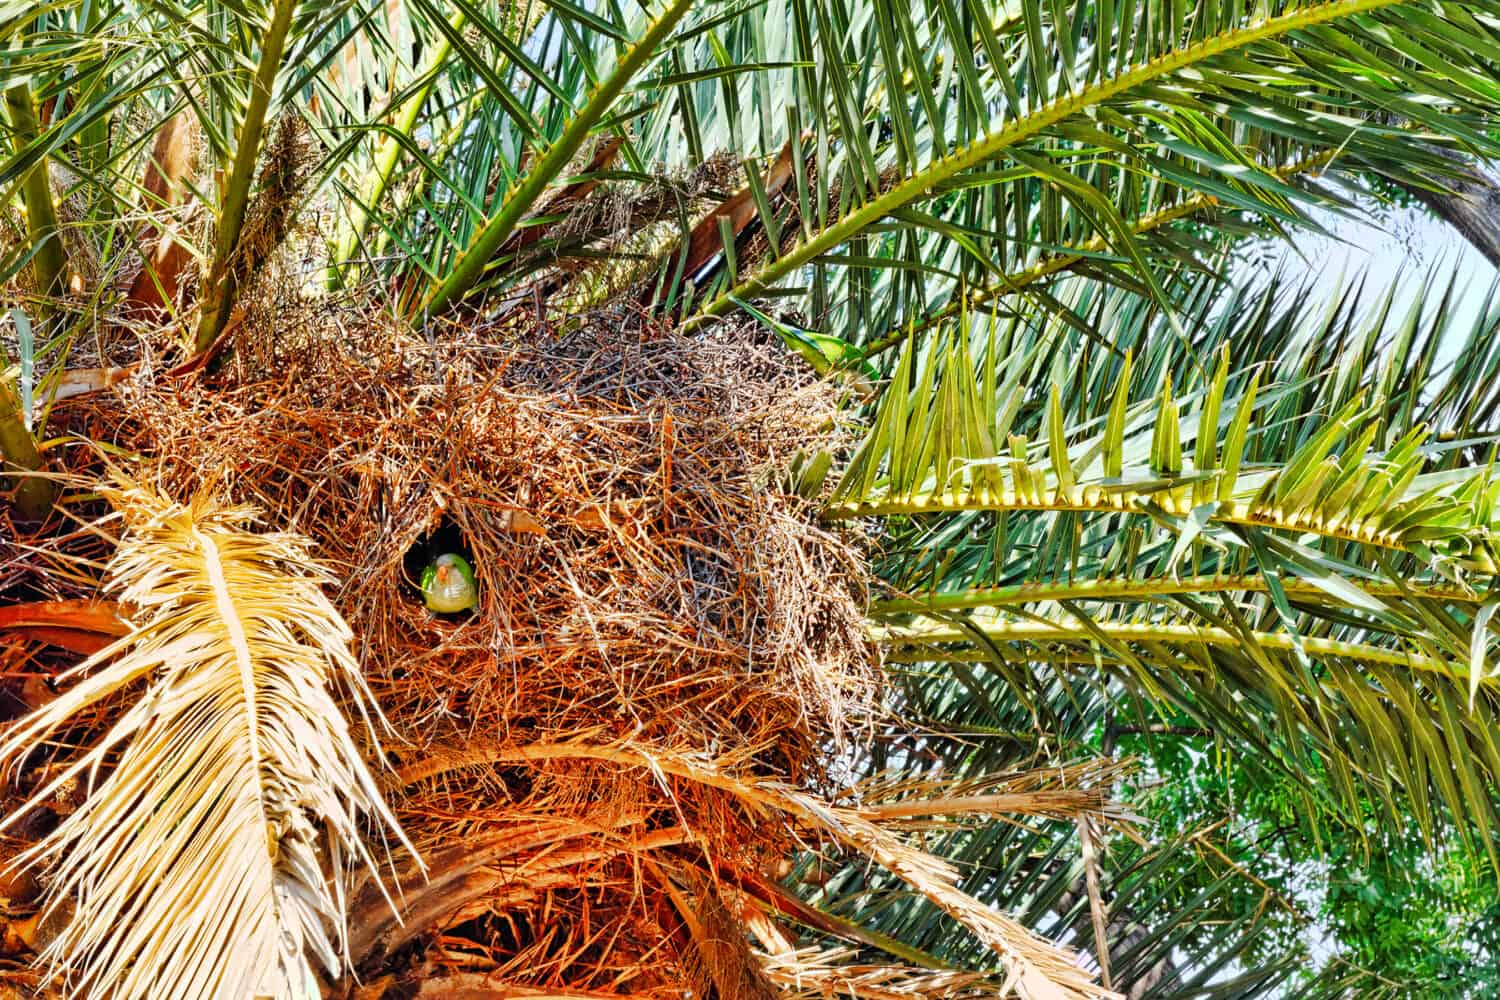 Big Argentina Parrot nests.